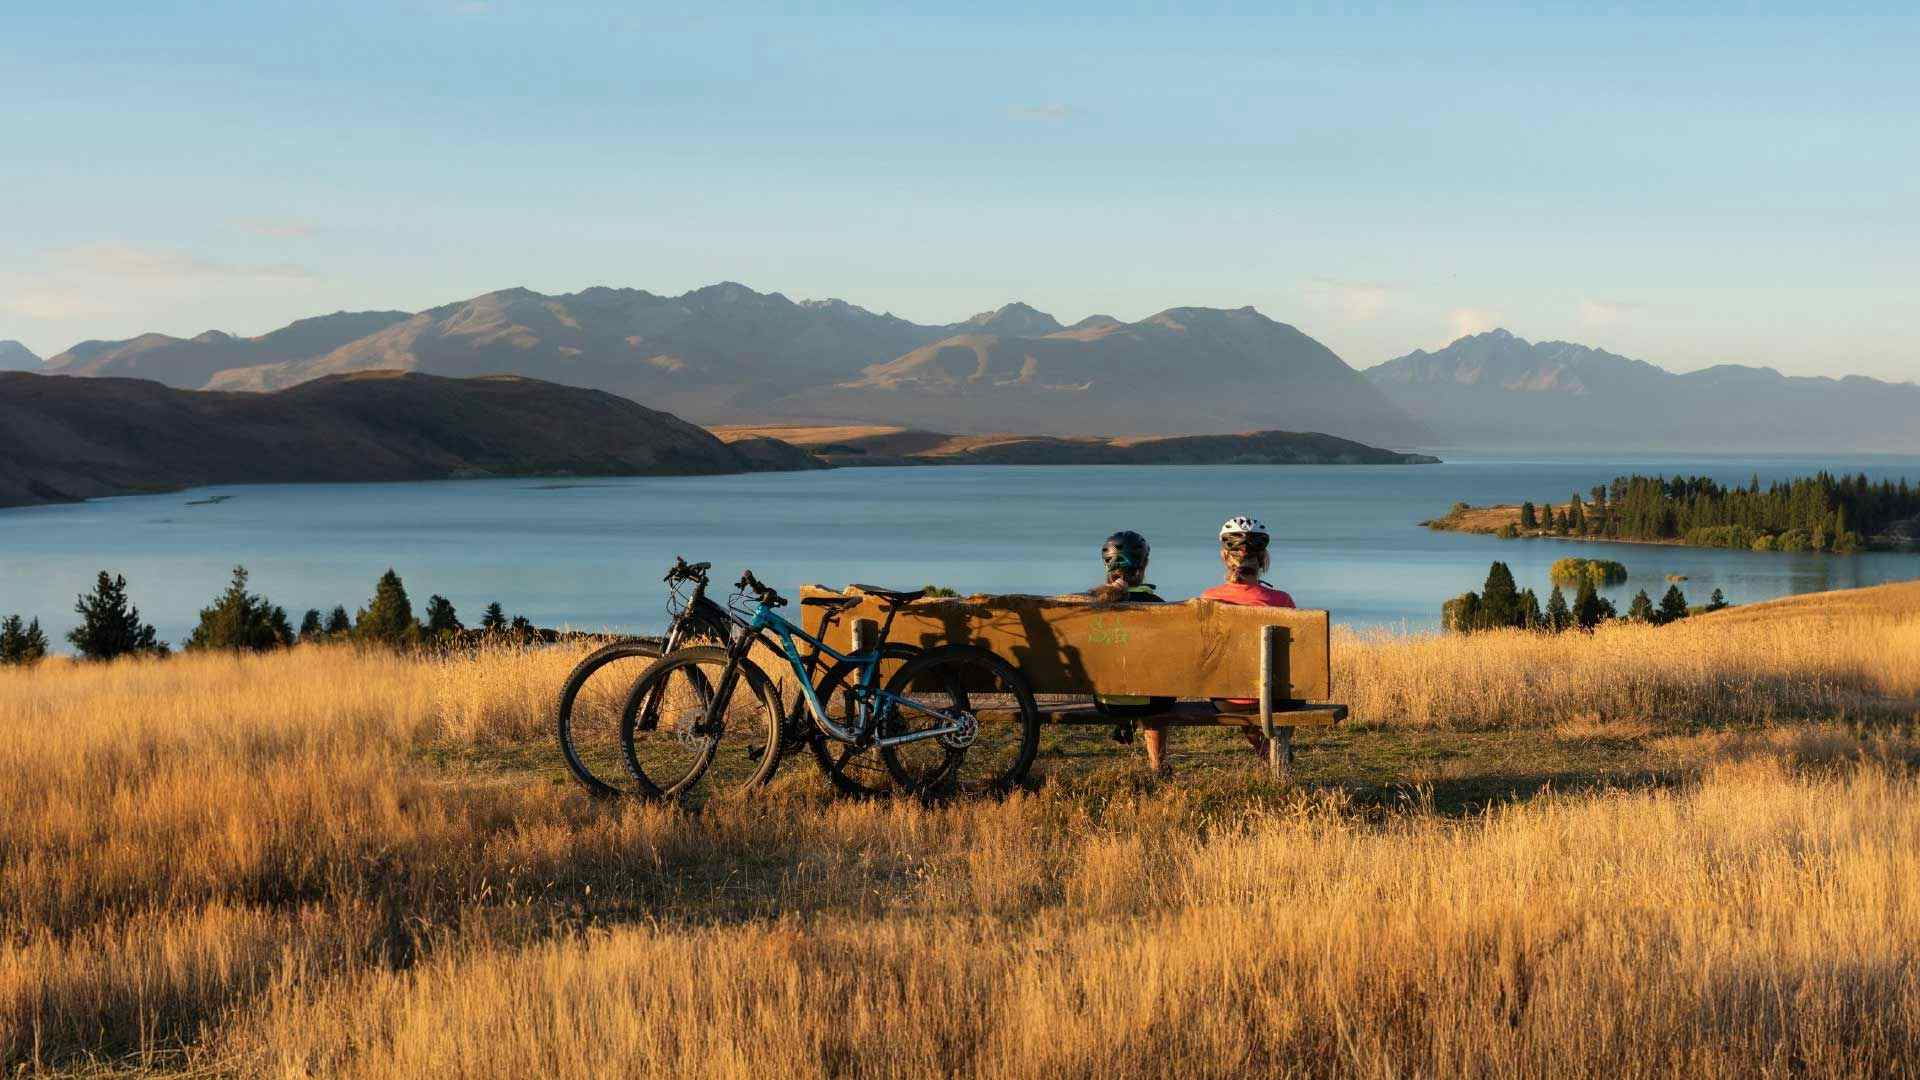 Two cyclists admire the view at Lake Tekapo